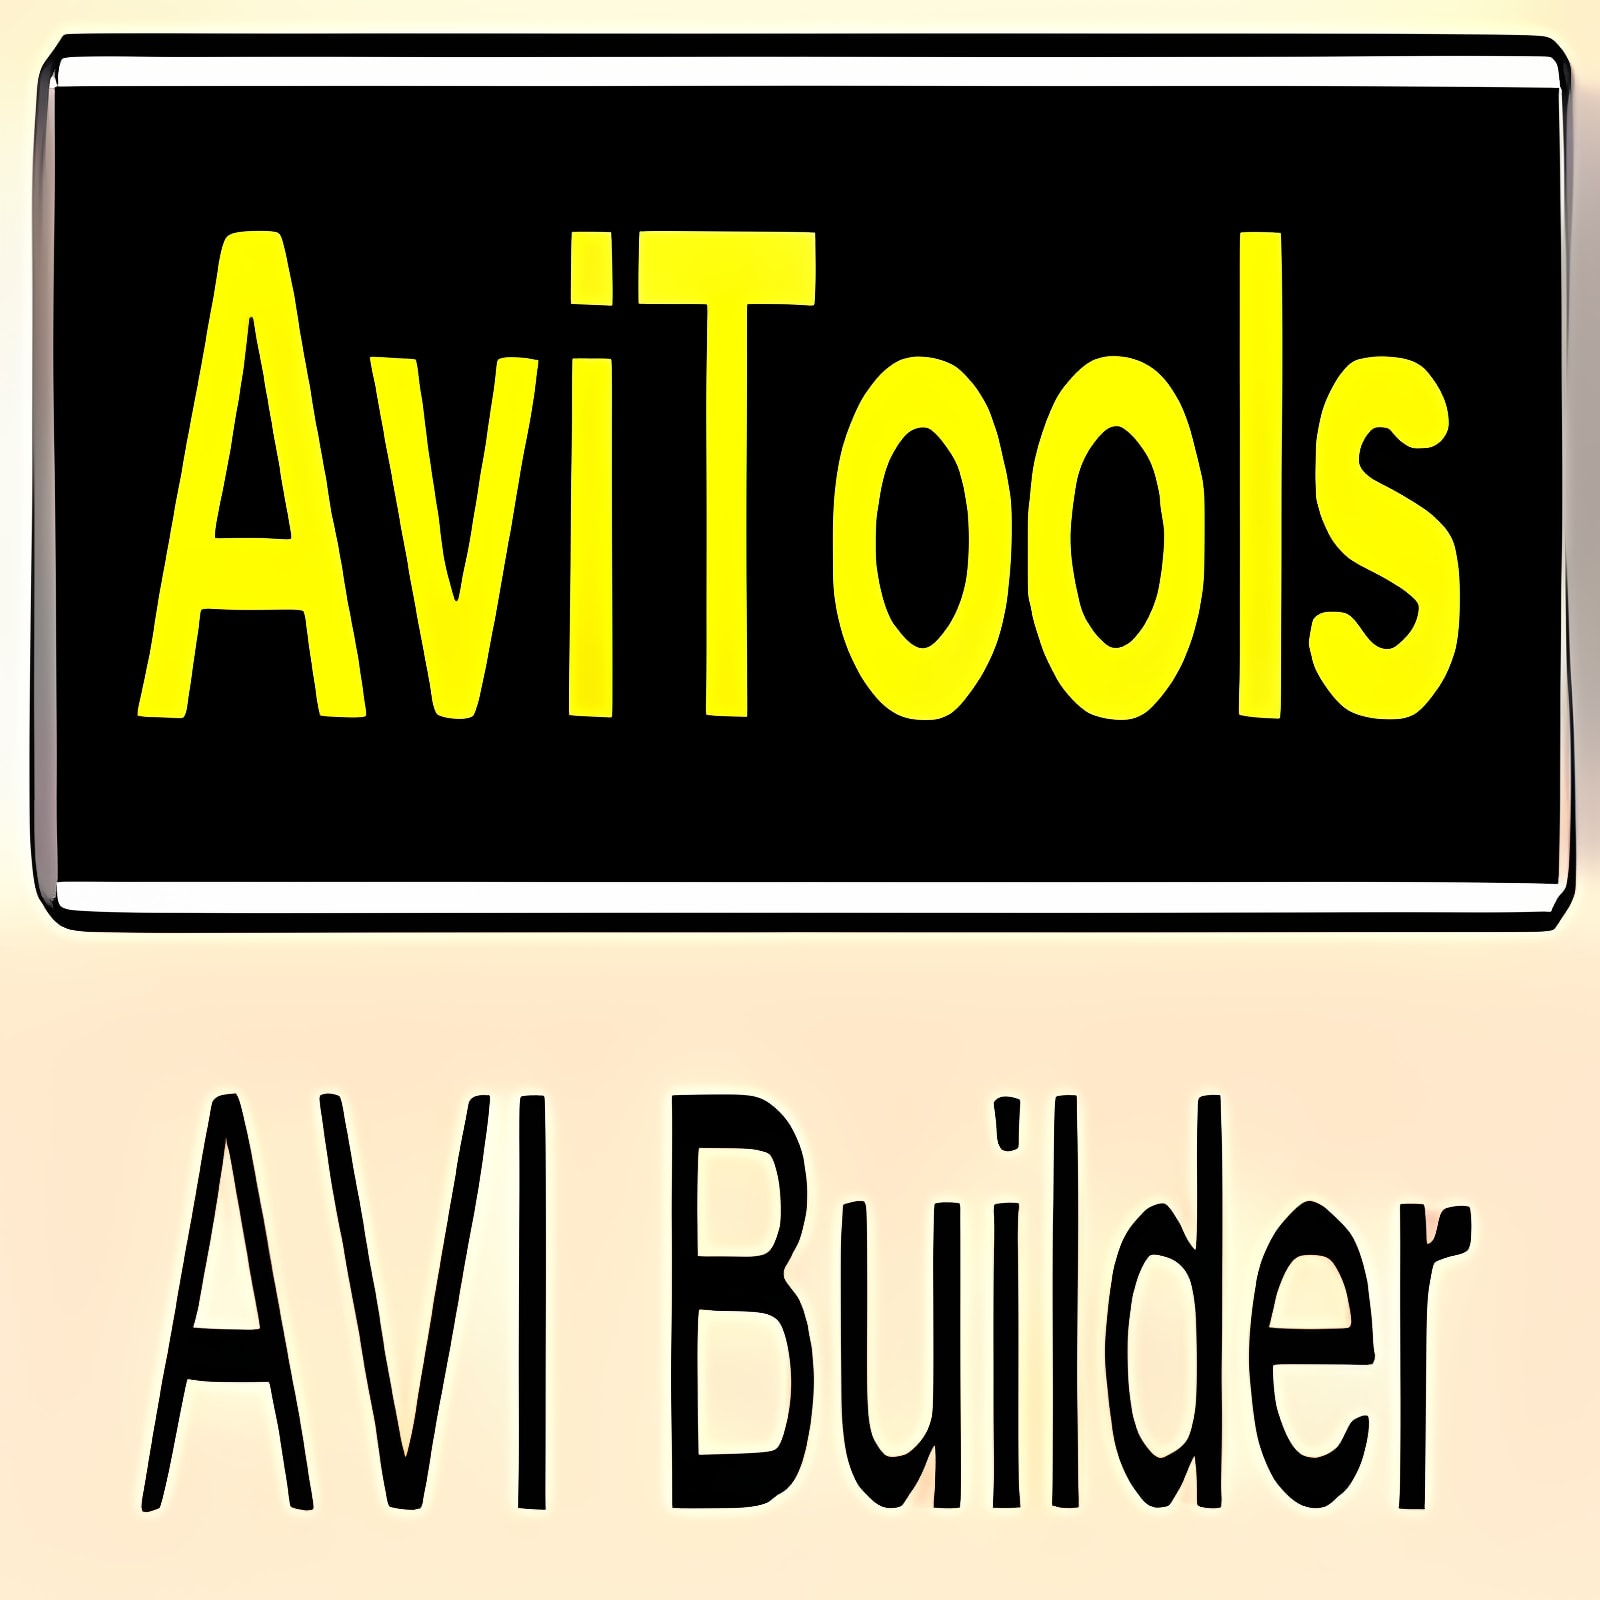 avitools for windows 10